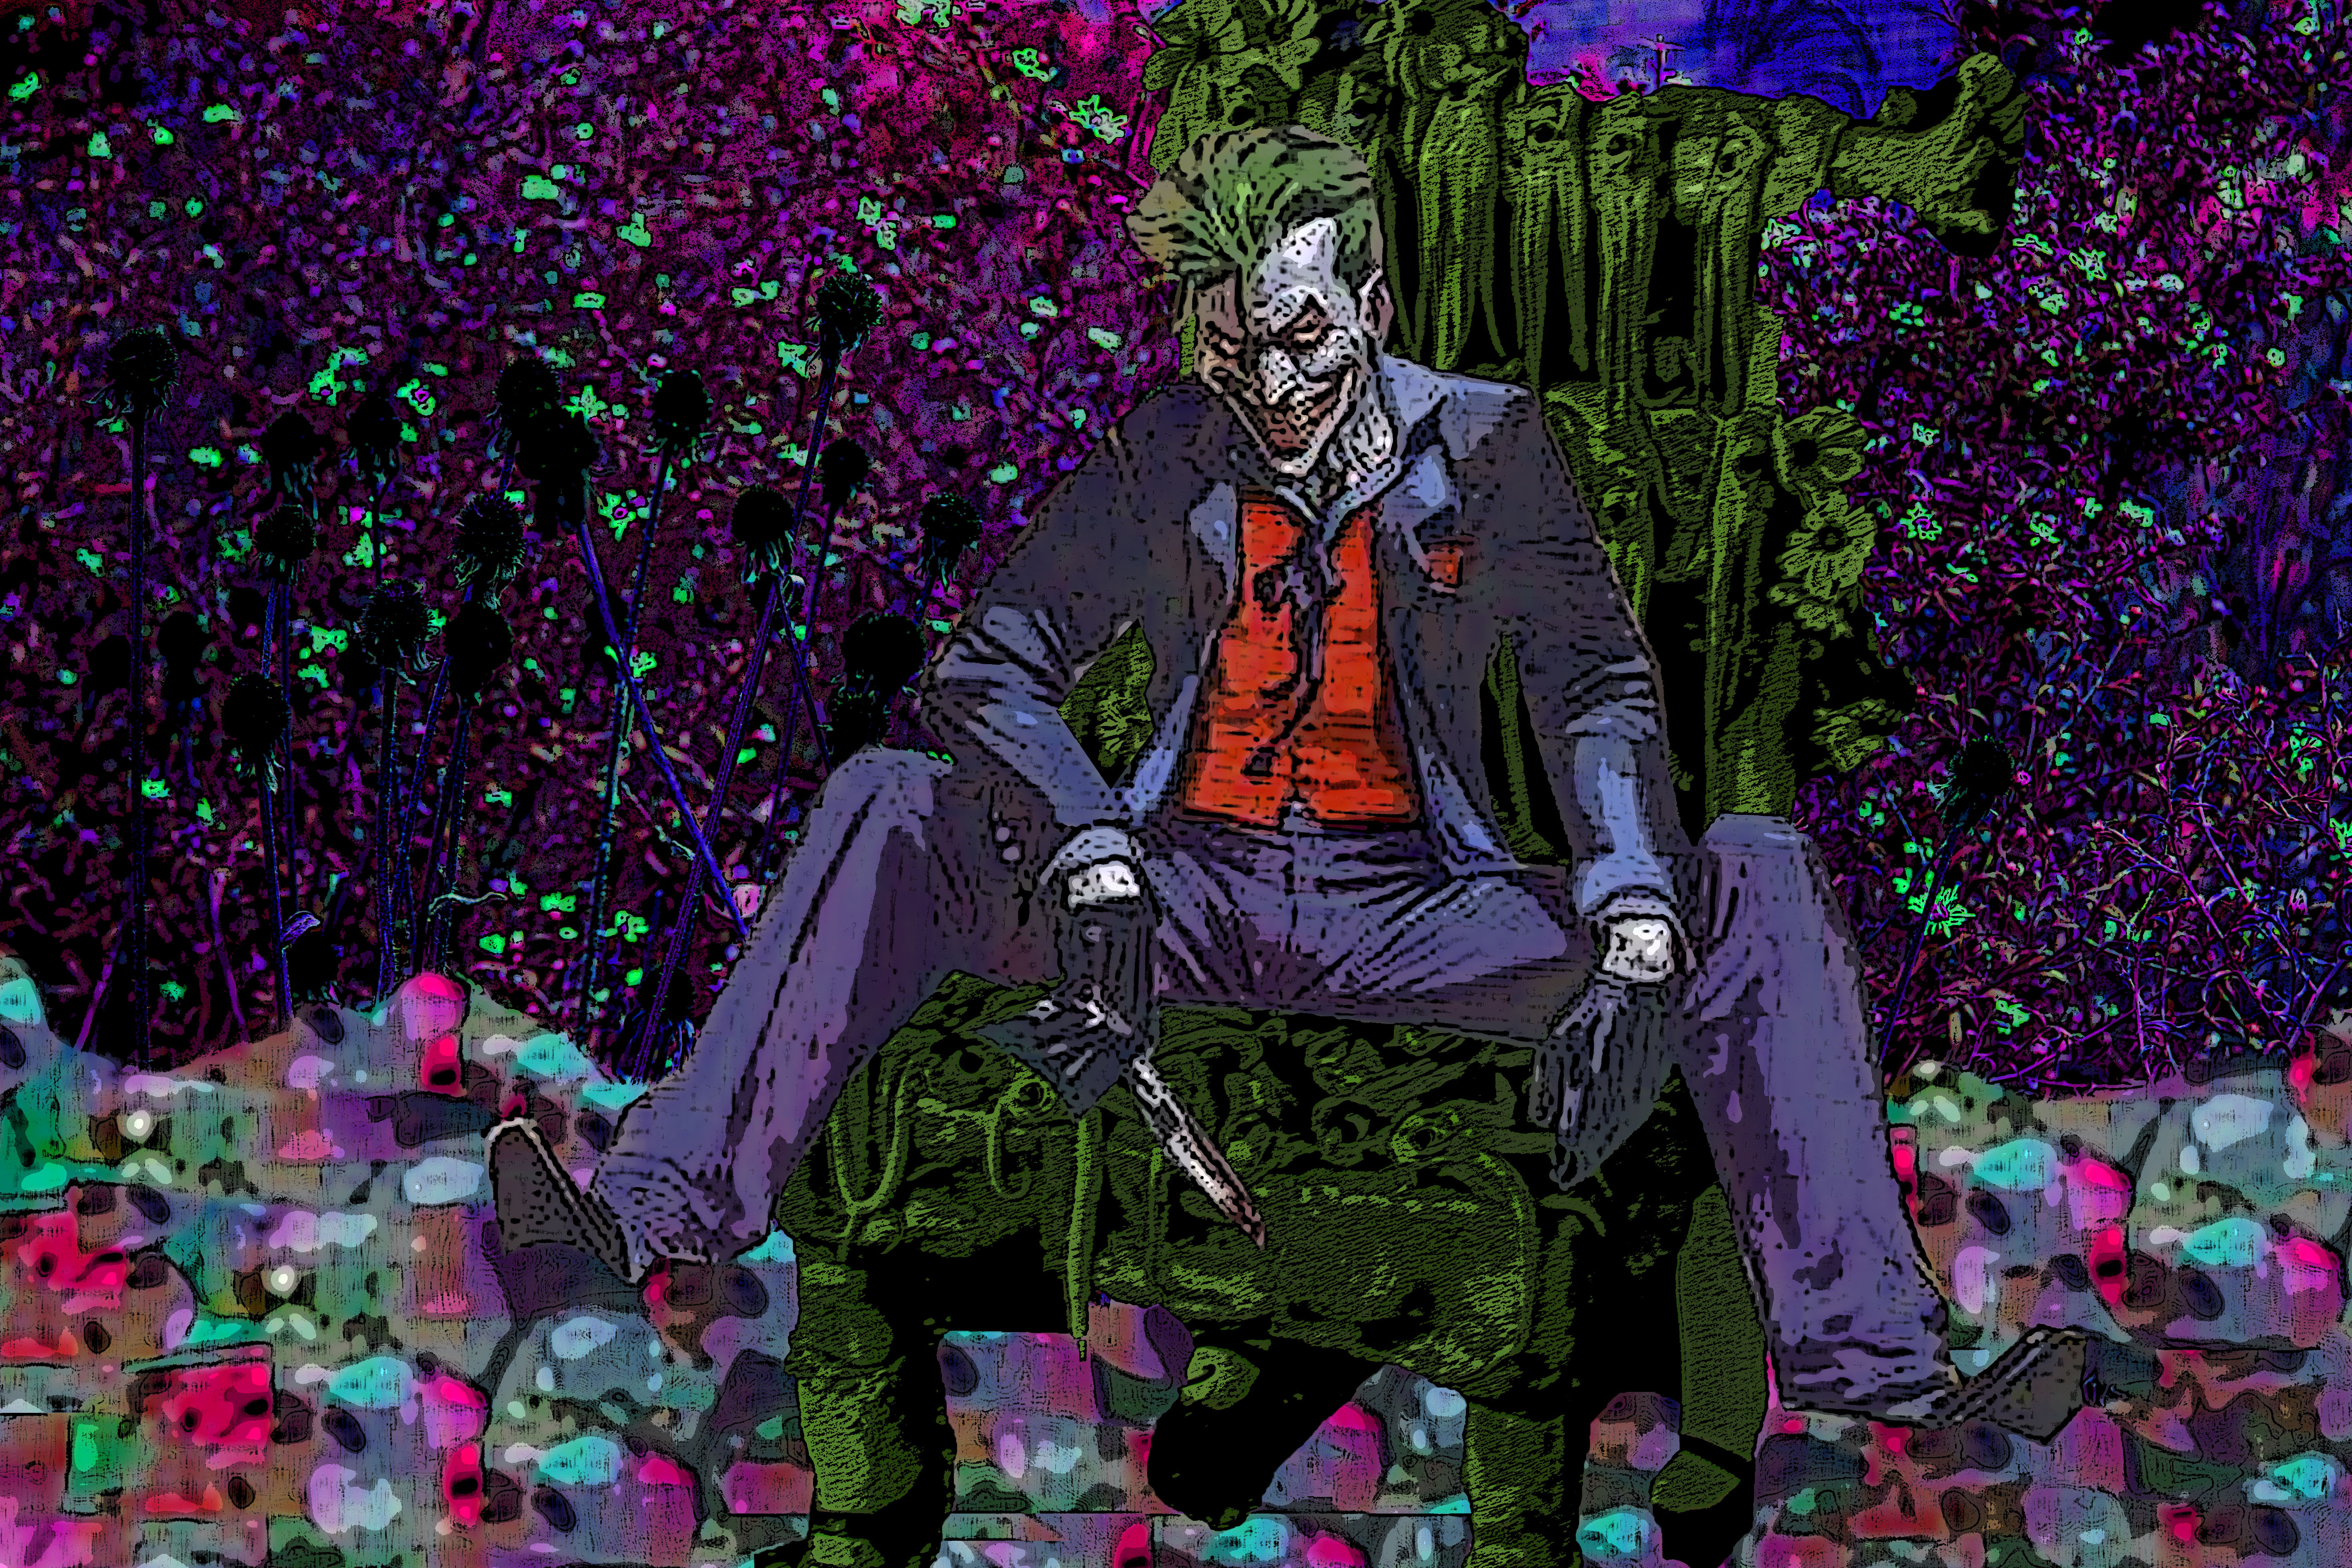 Joker in a chair